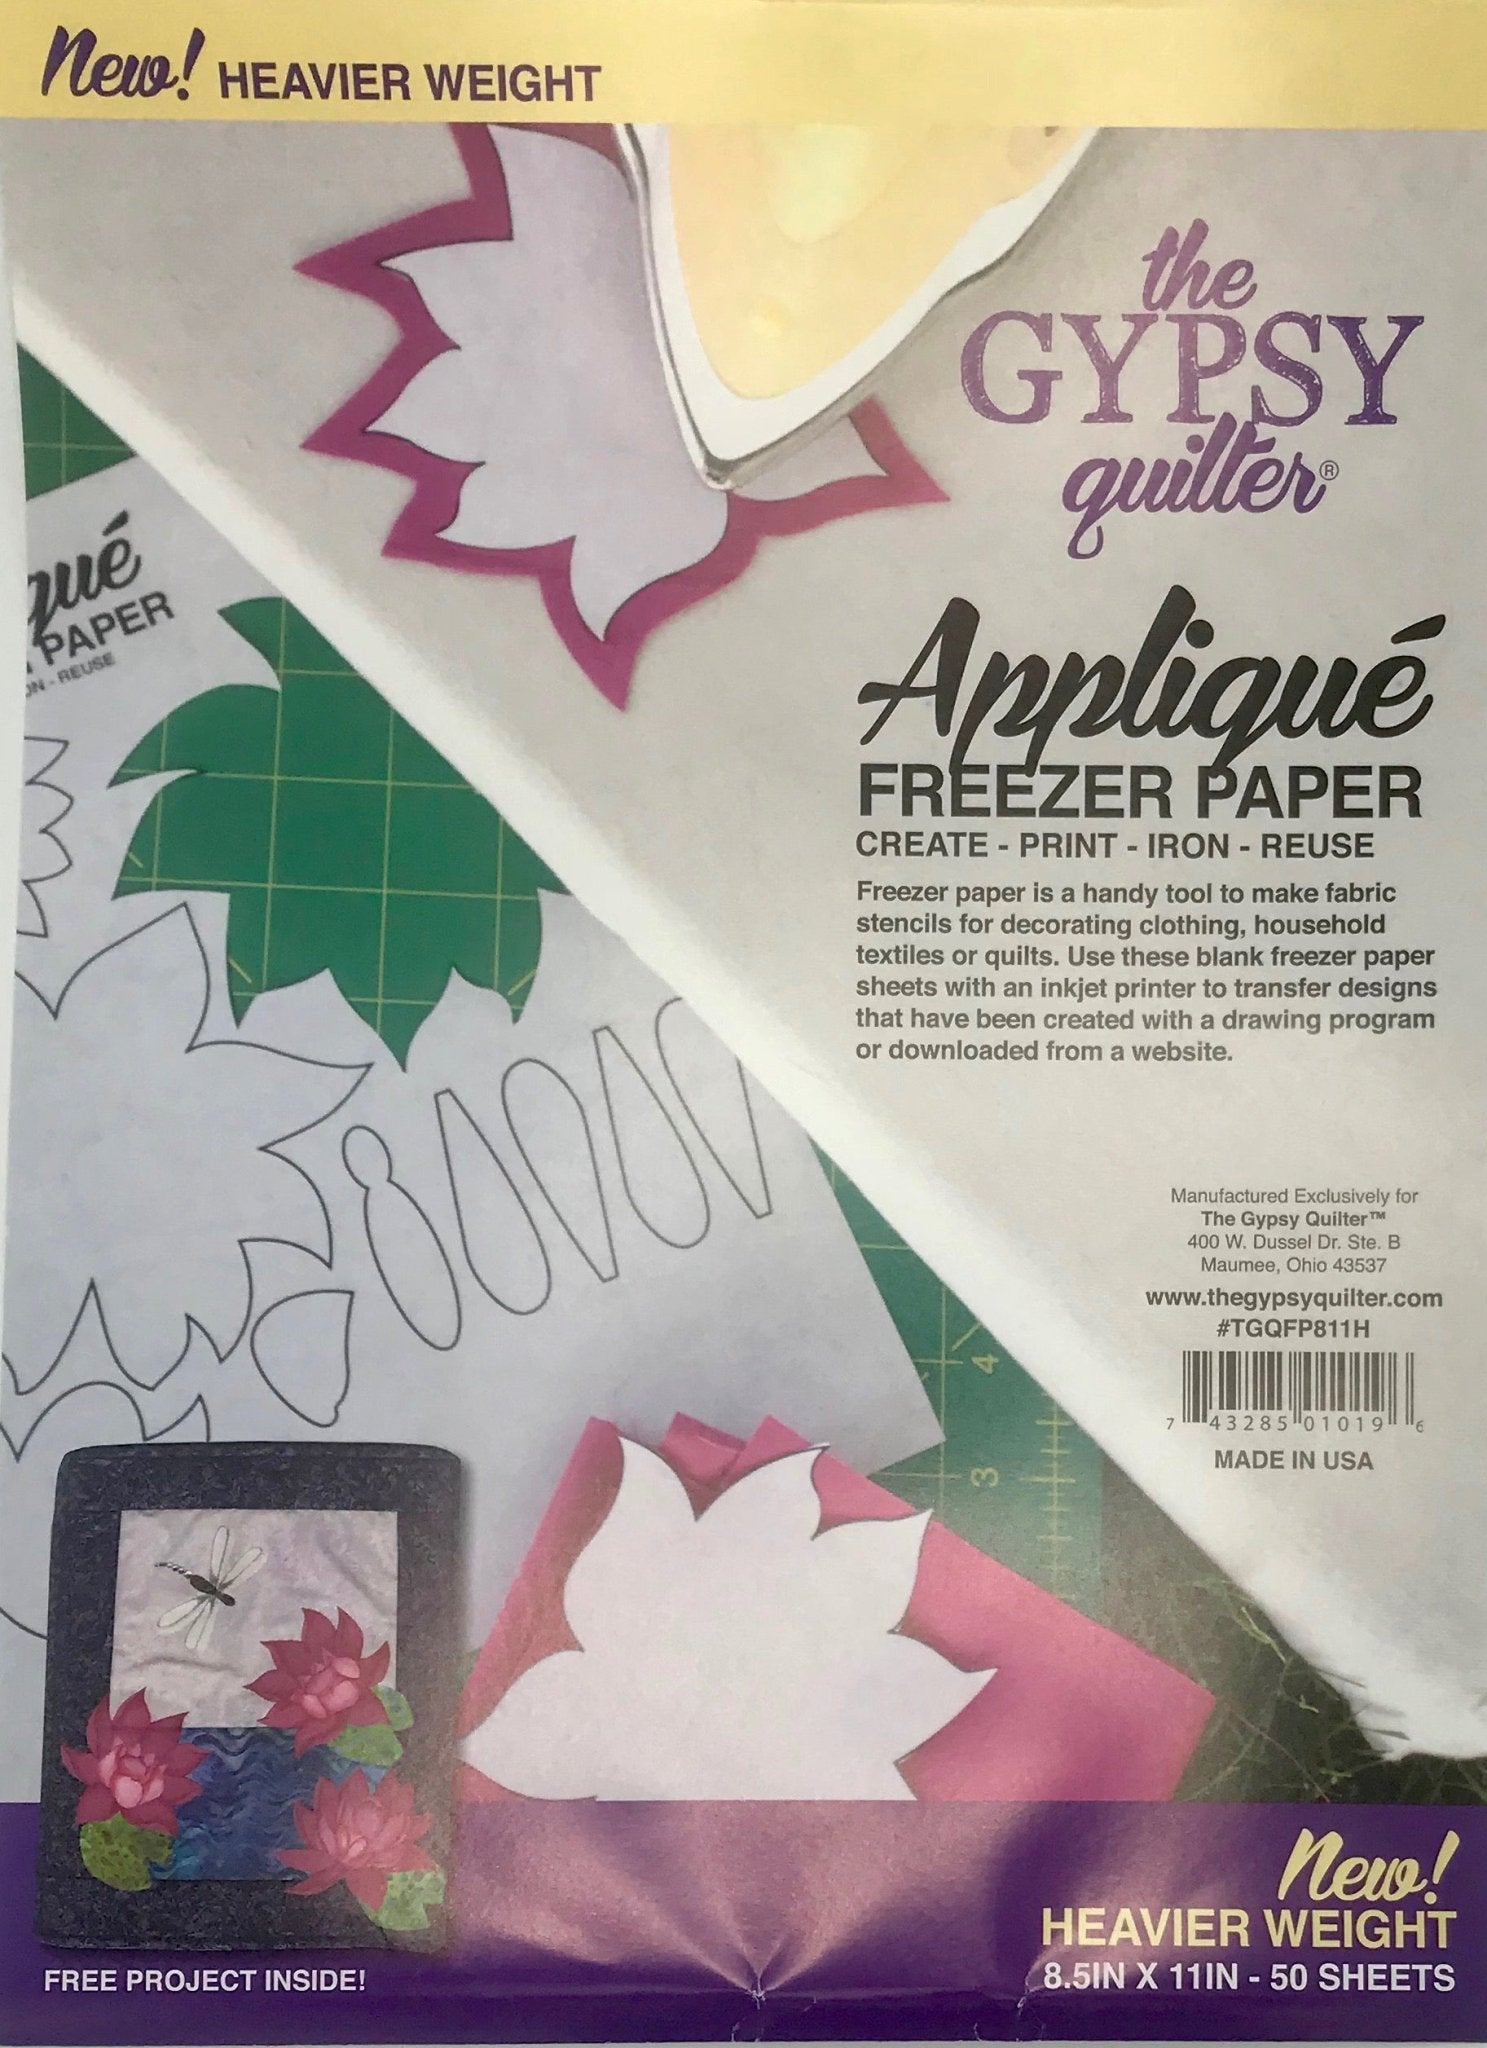 Appliqué Freezer Paper Sheets - Sewforever